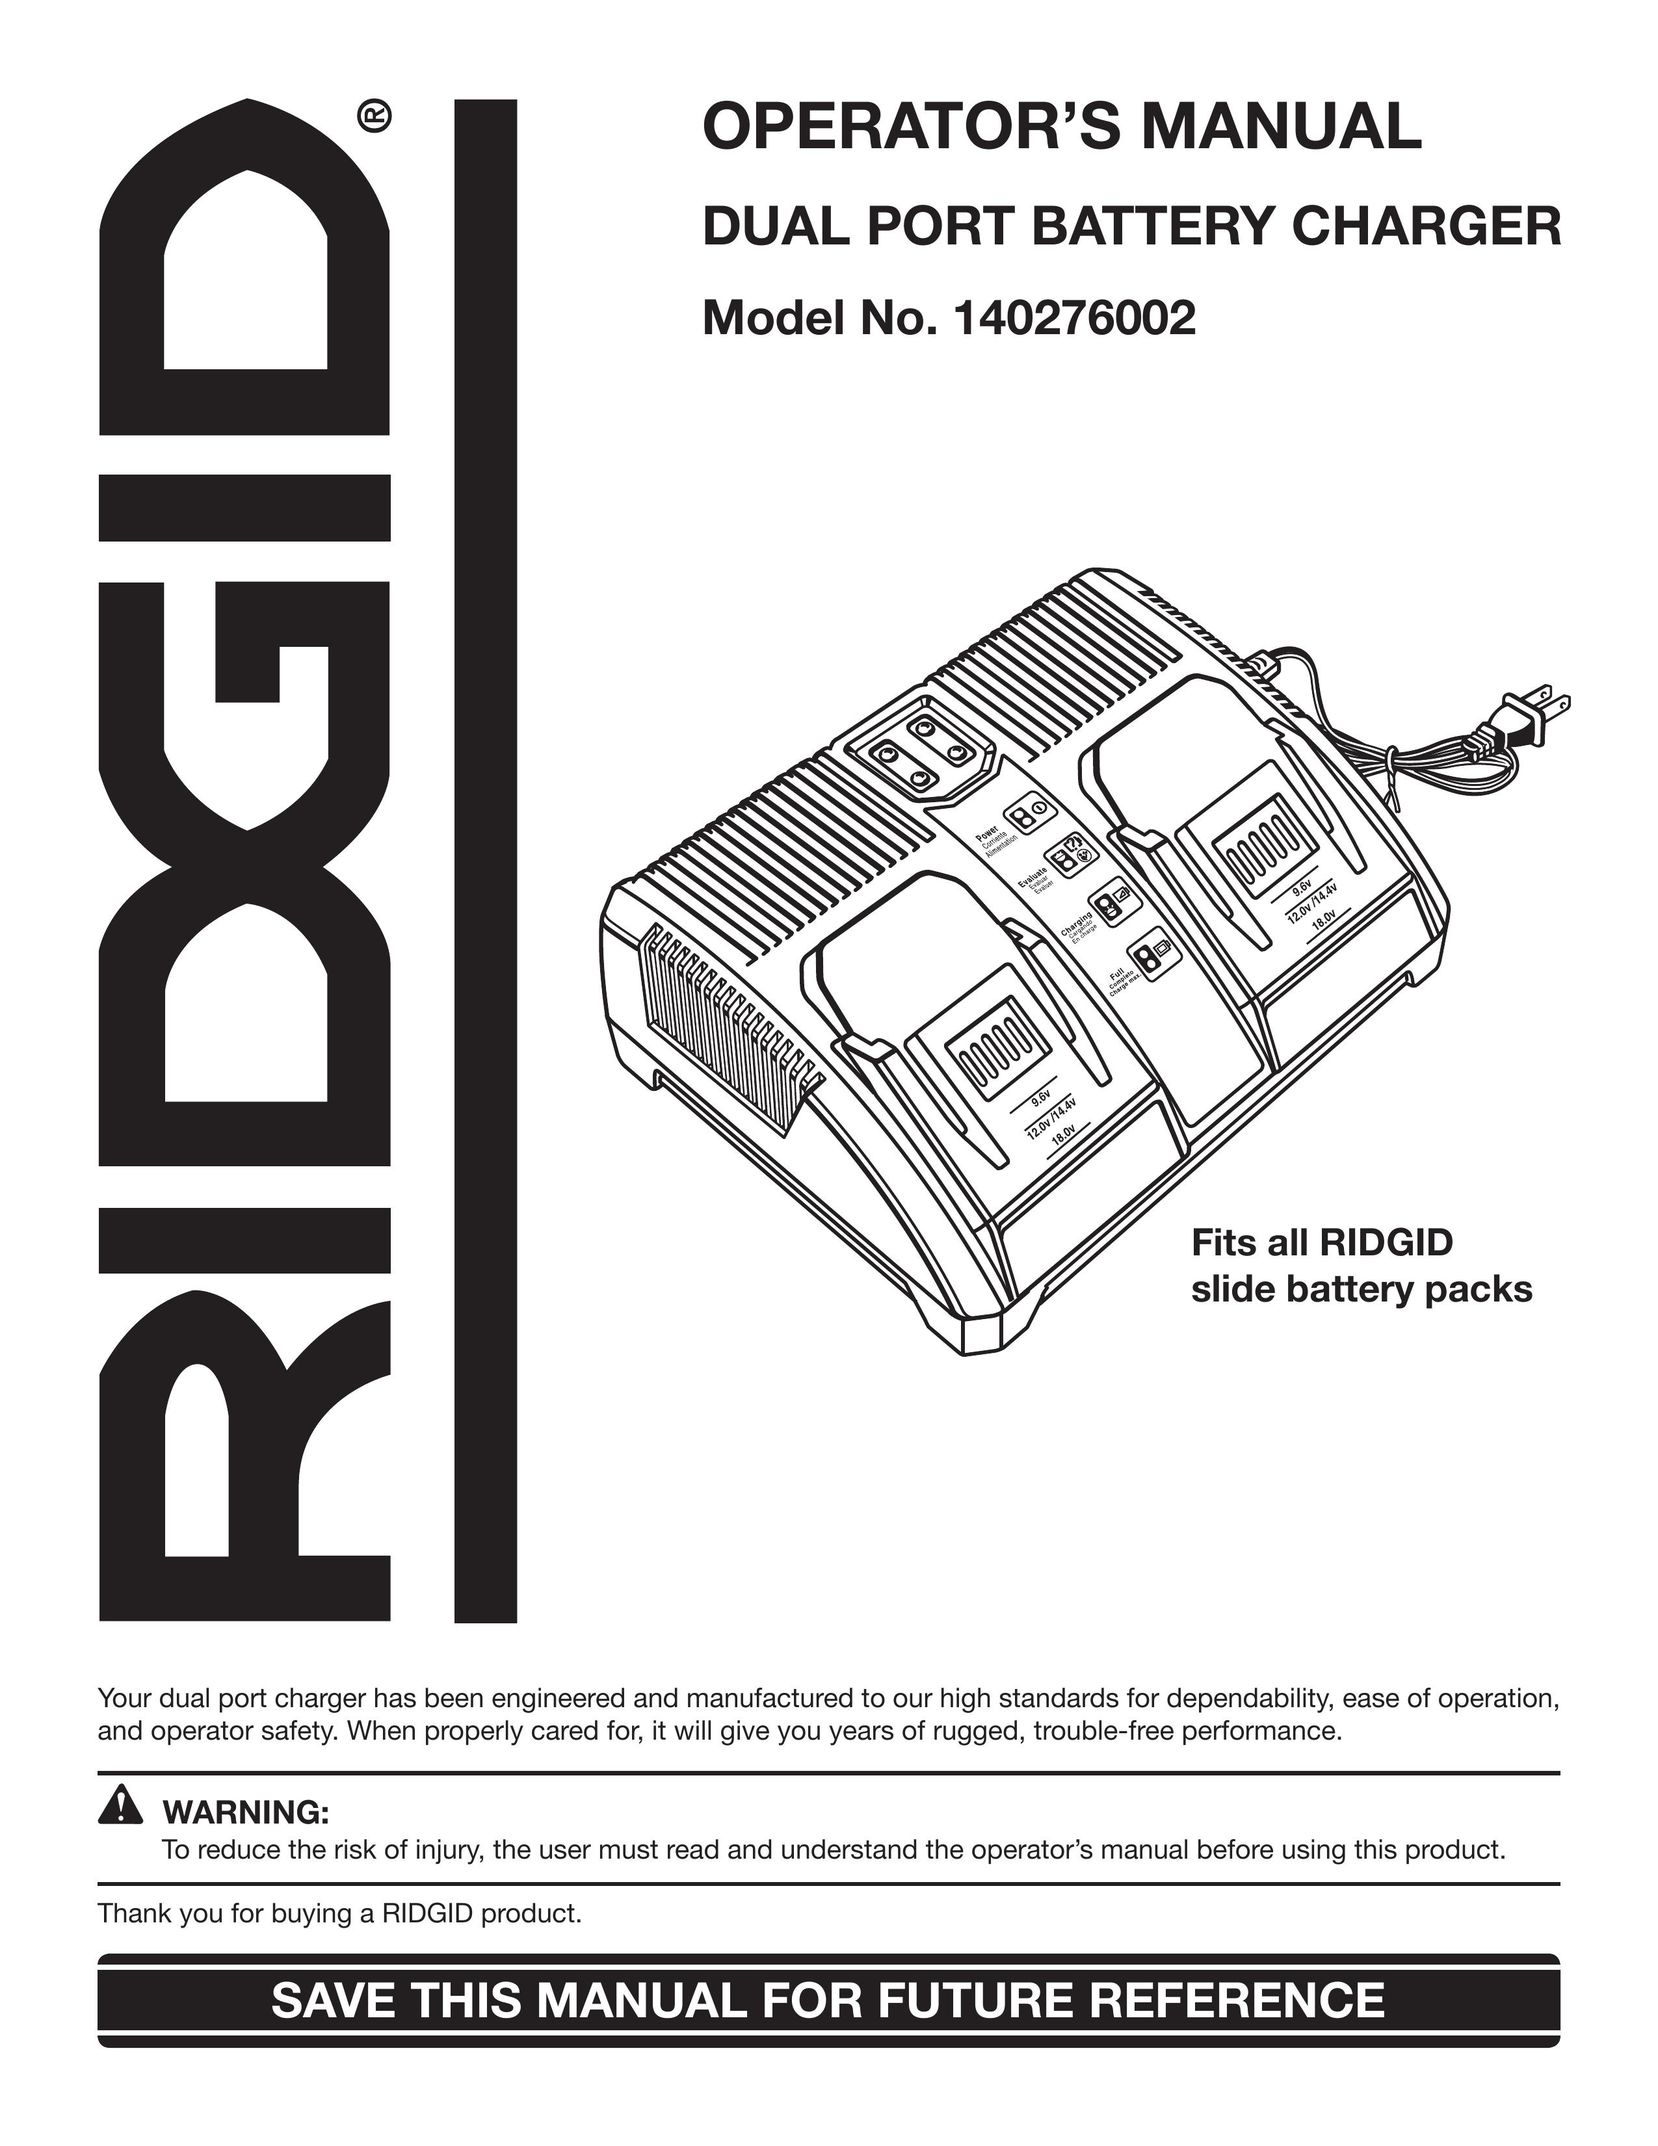 RIDGID 140276002 Battery Charger User Manual